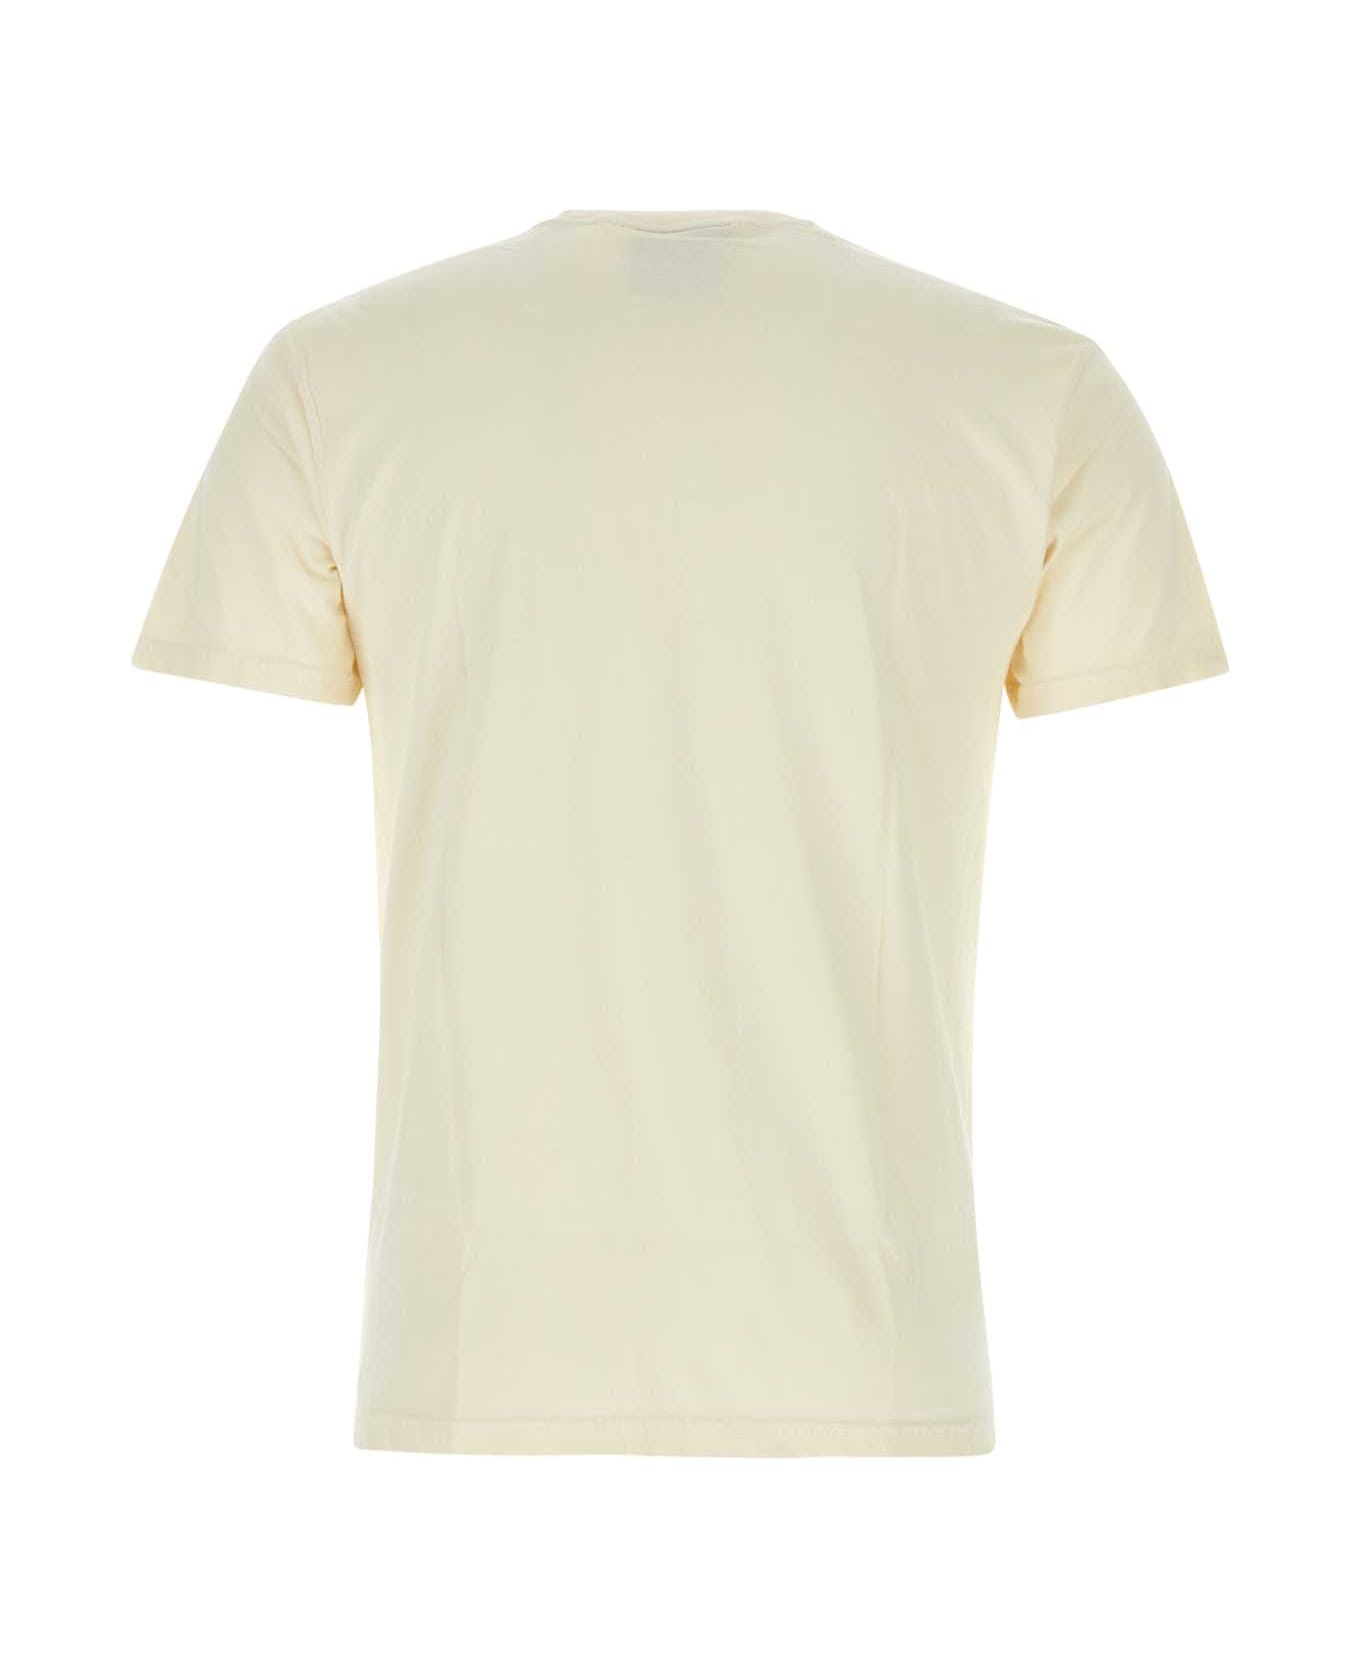 Kidsuper Cream Cotton T-shirt - CREAM シャツ